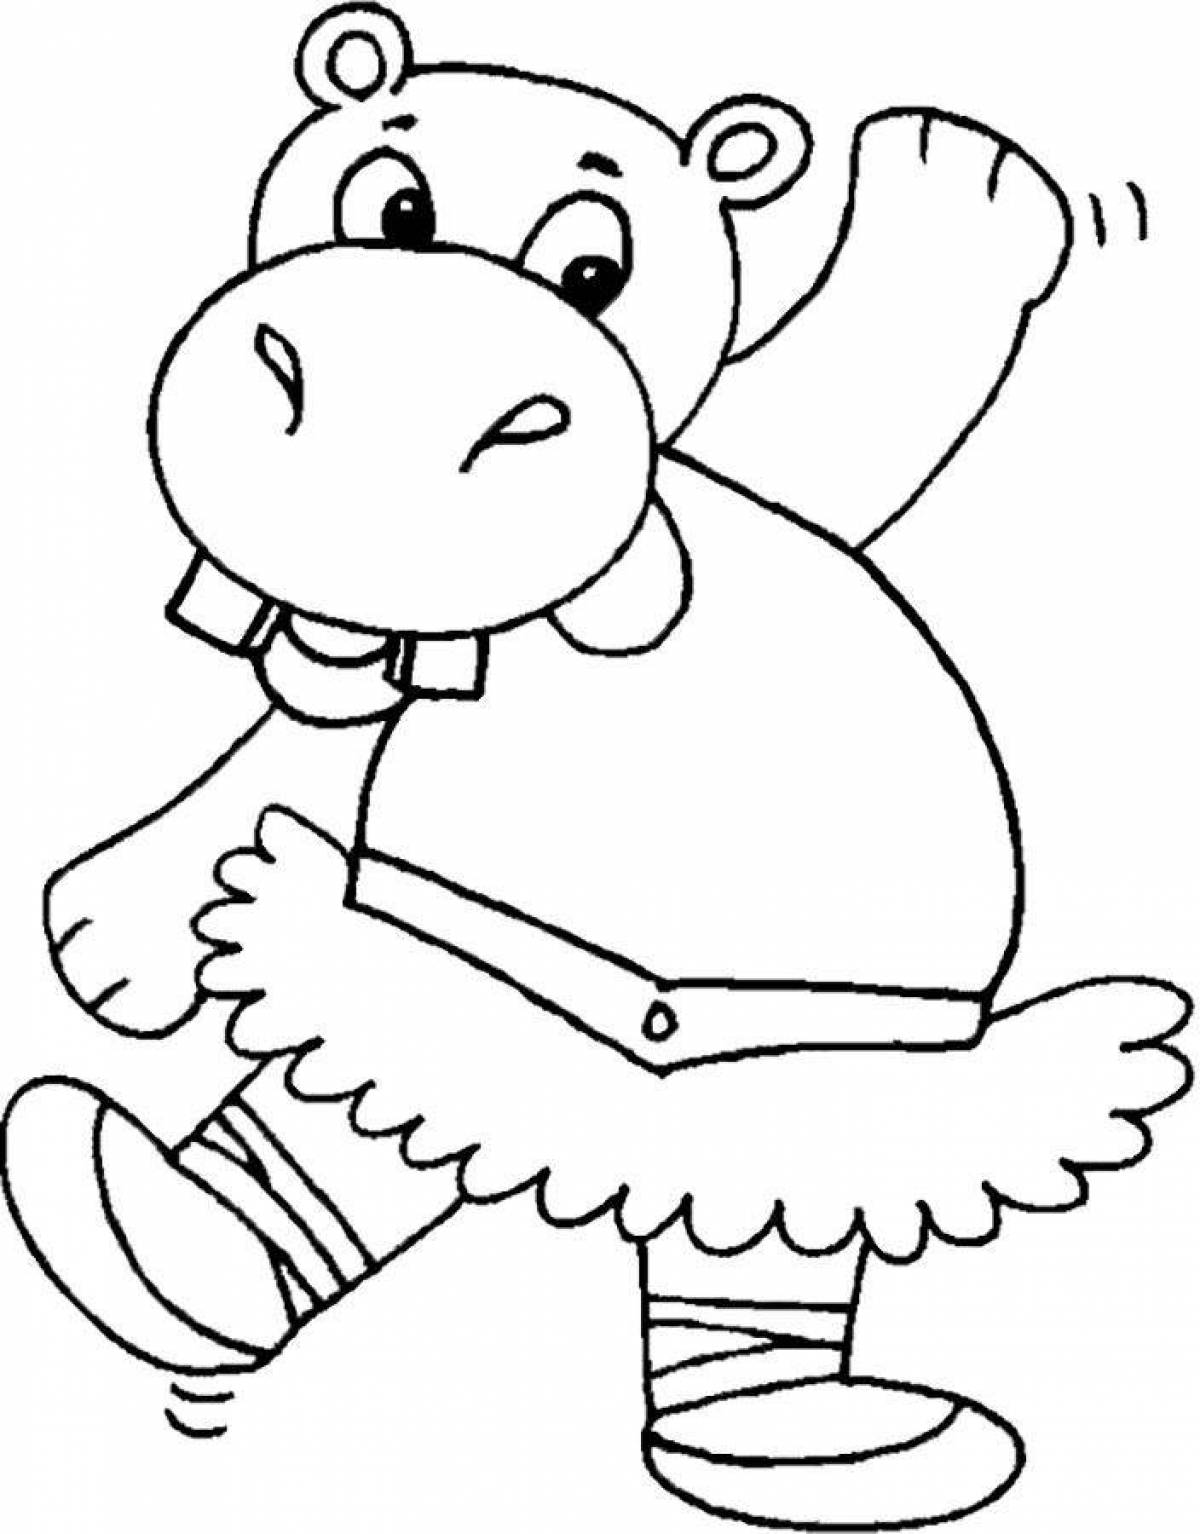 Cute hippo coloring book